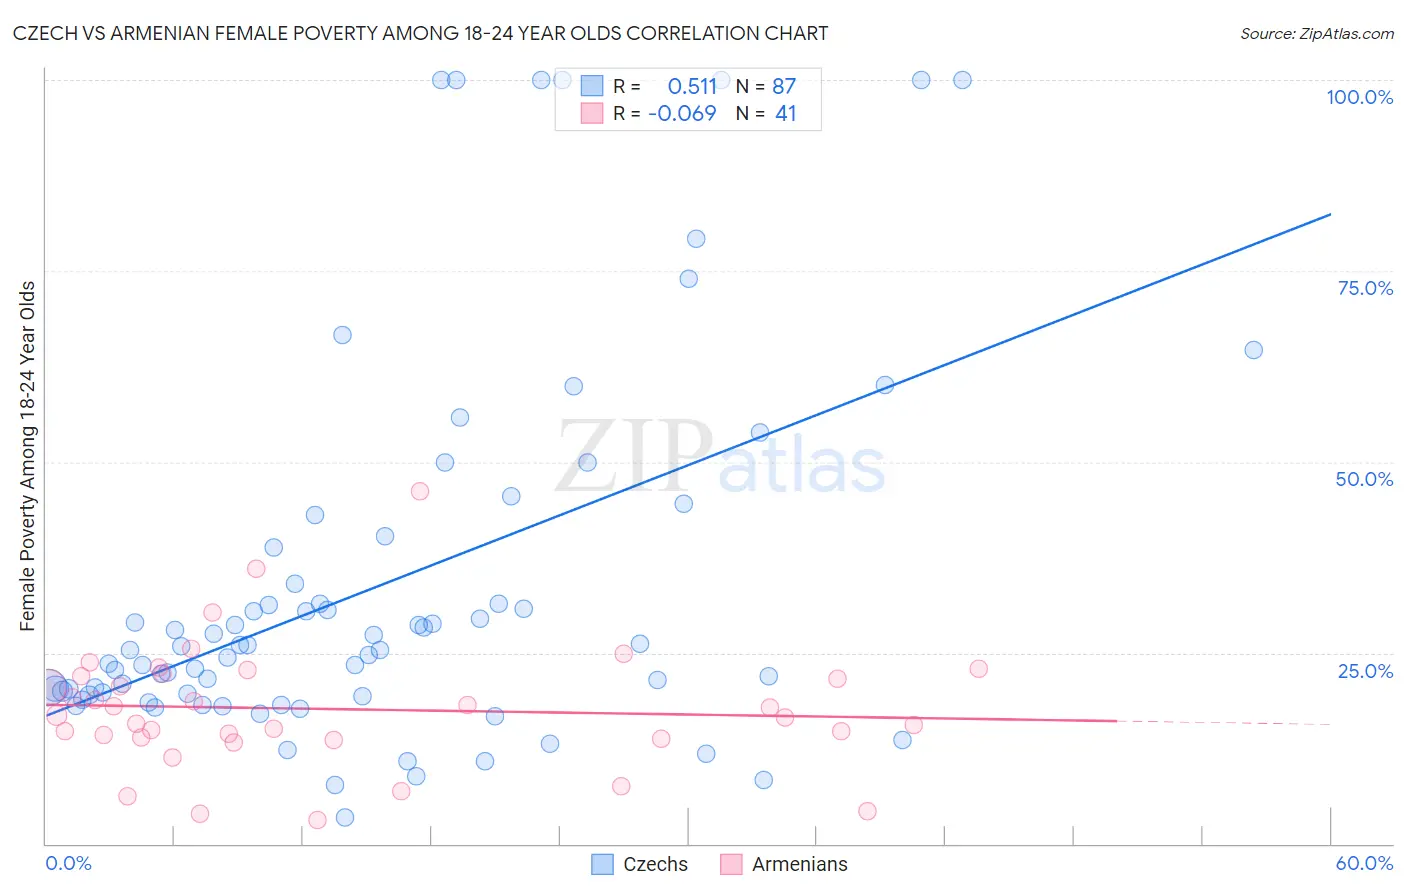 Czech vs Armenian Female Poverty Among 18-24 Year Olds